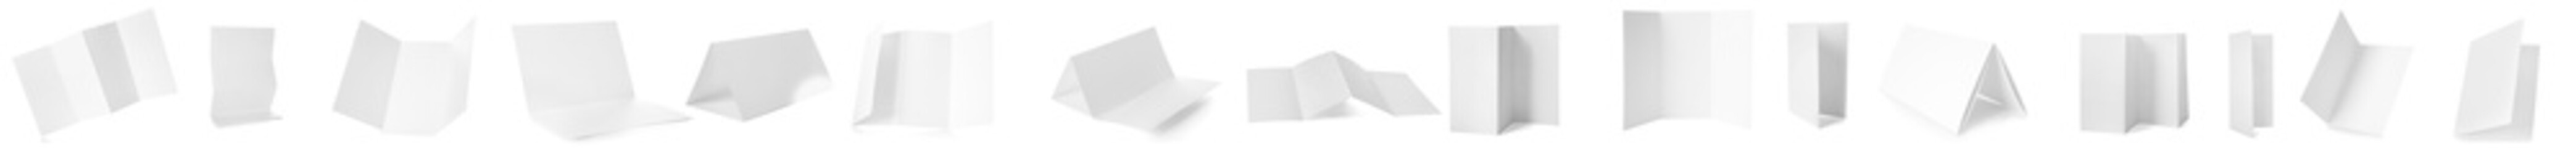 Set of blank brochures on white background